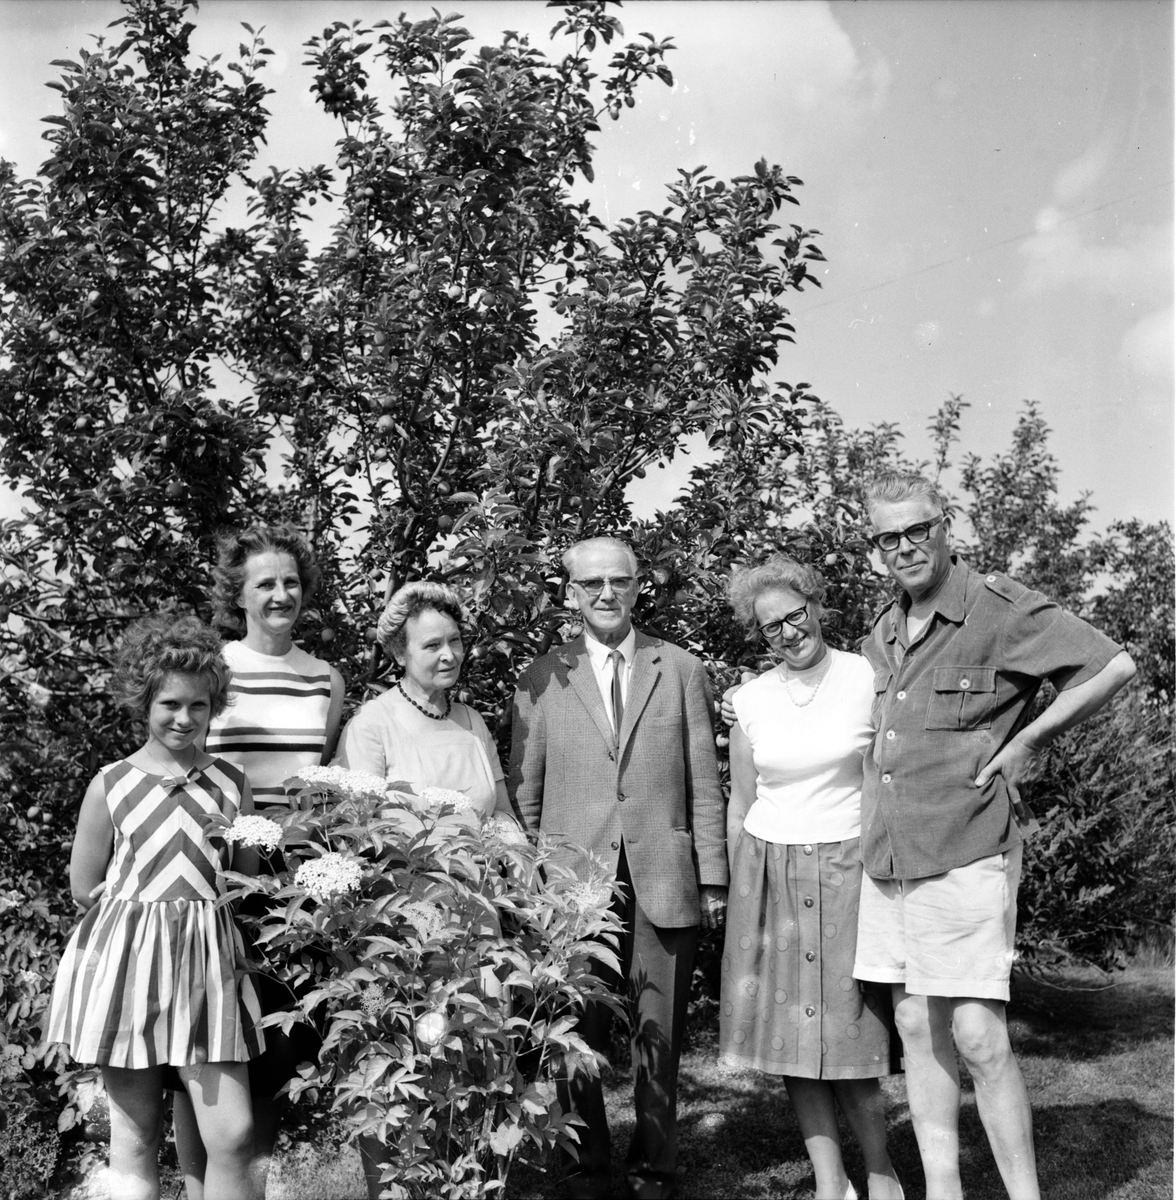 Wasabarn fr. USA,
Mrs Eva Rae Briscoe, Portland, Oreg.
Anna & Ruben Haglund Södertälje,
9 Augusti 1964